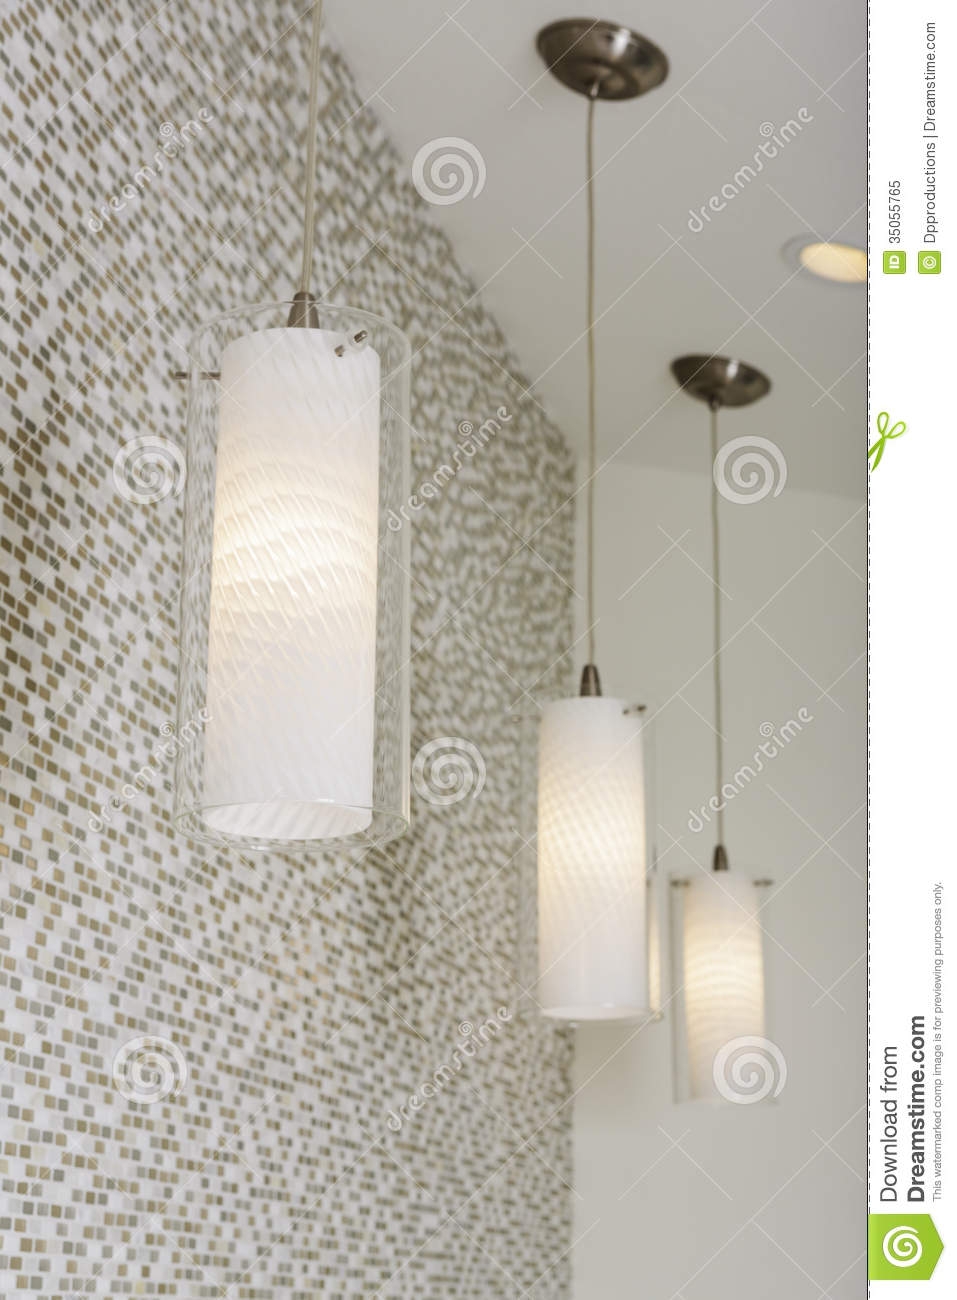 Permalink to Ceiling Tile Lighting Fixtures